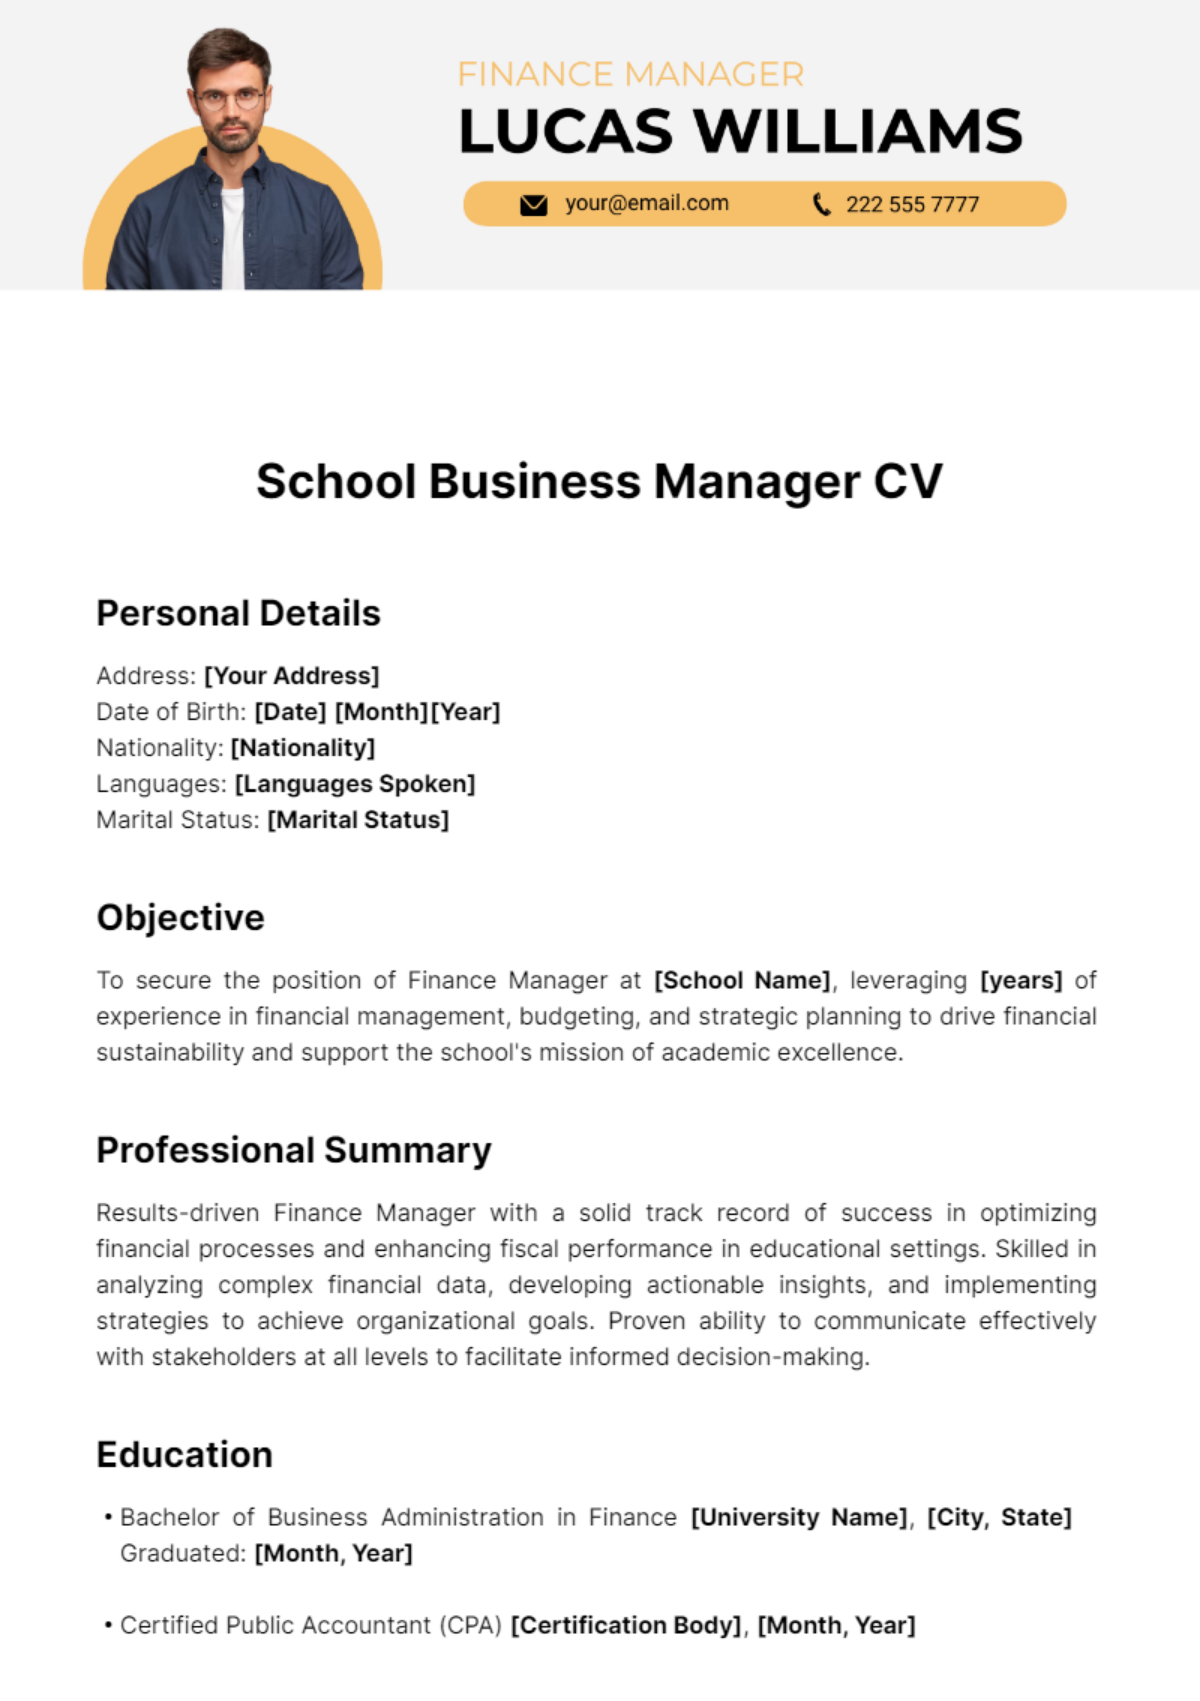 School Business Manager CV Template